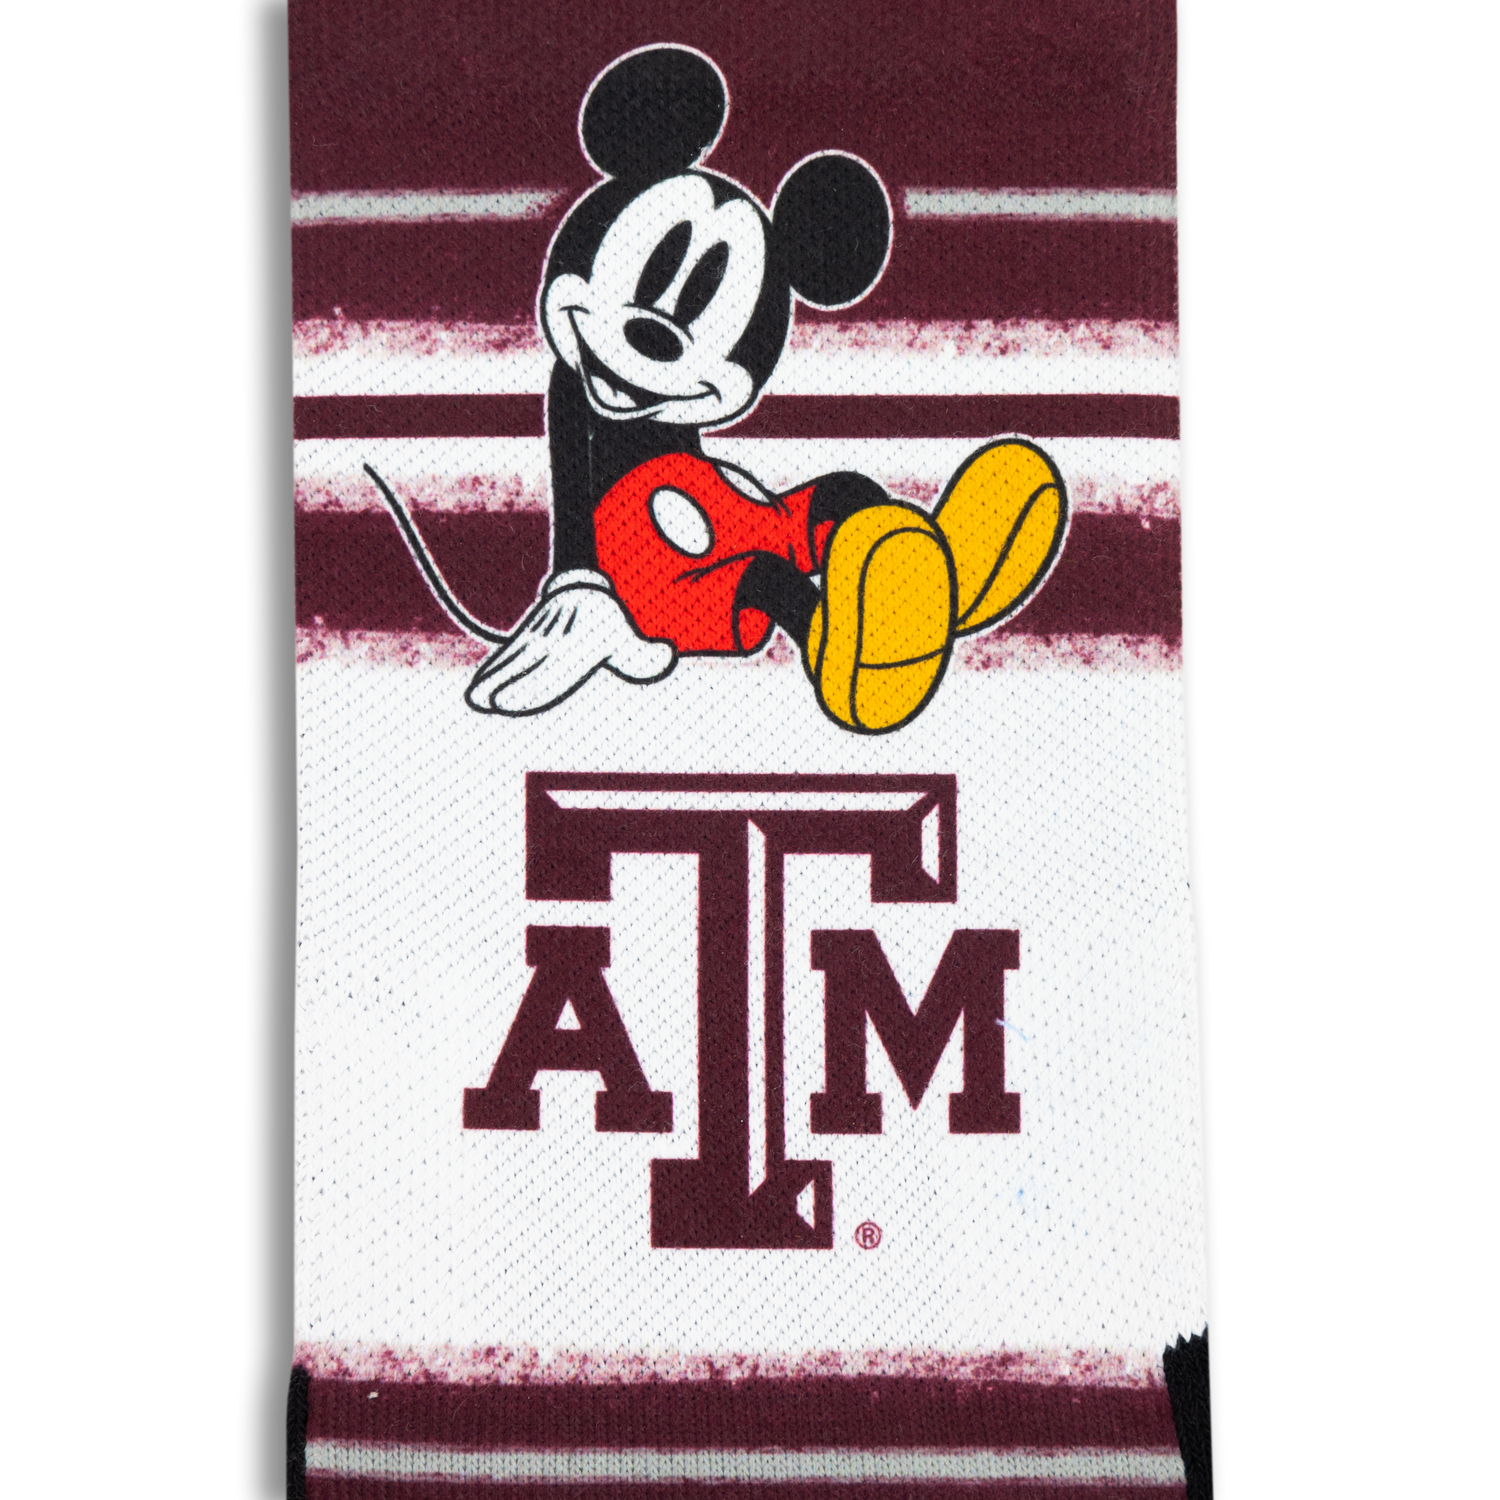 Texas A&M Rock 'Em Disney Maroon & White Stripe Socks